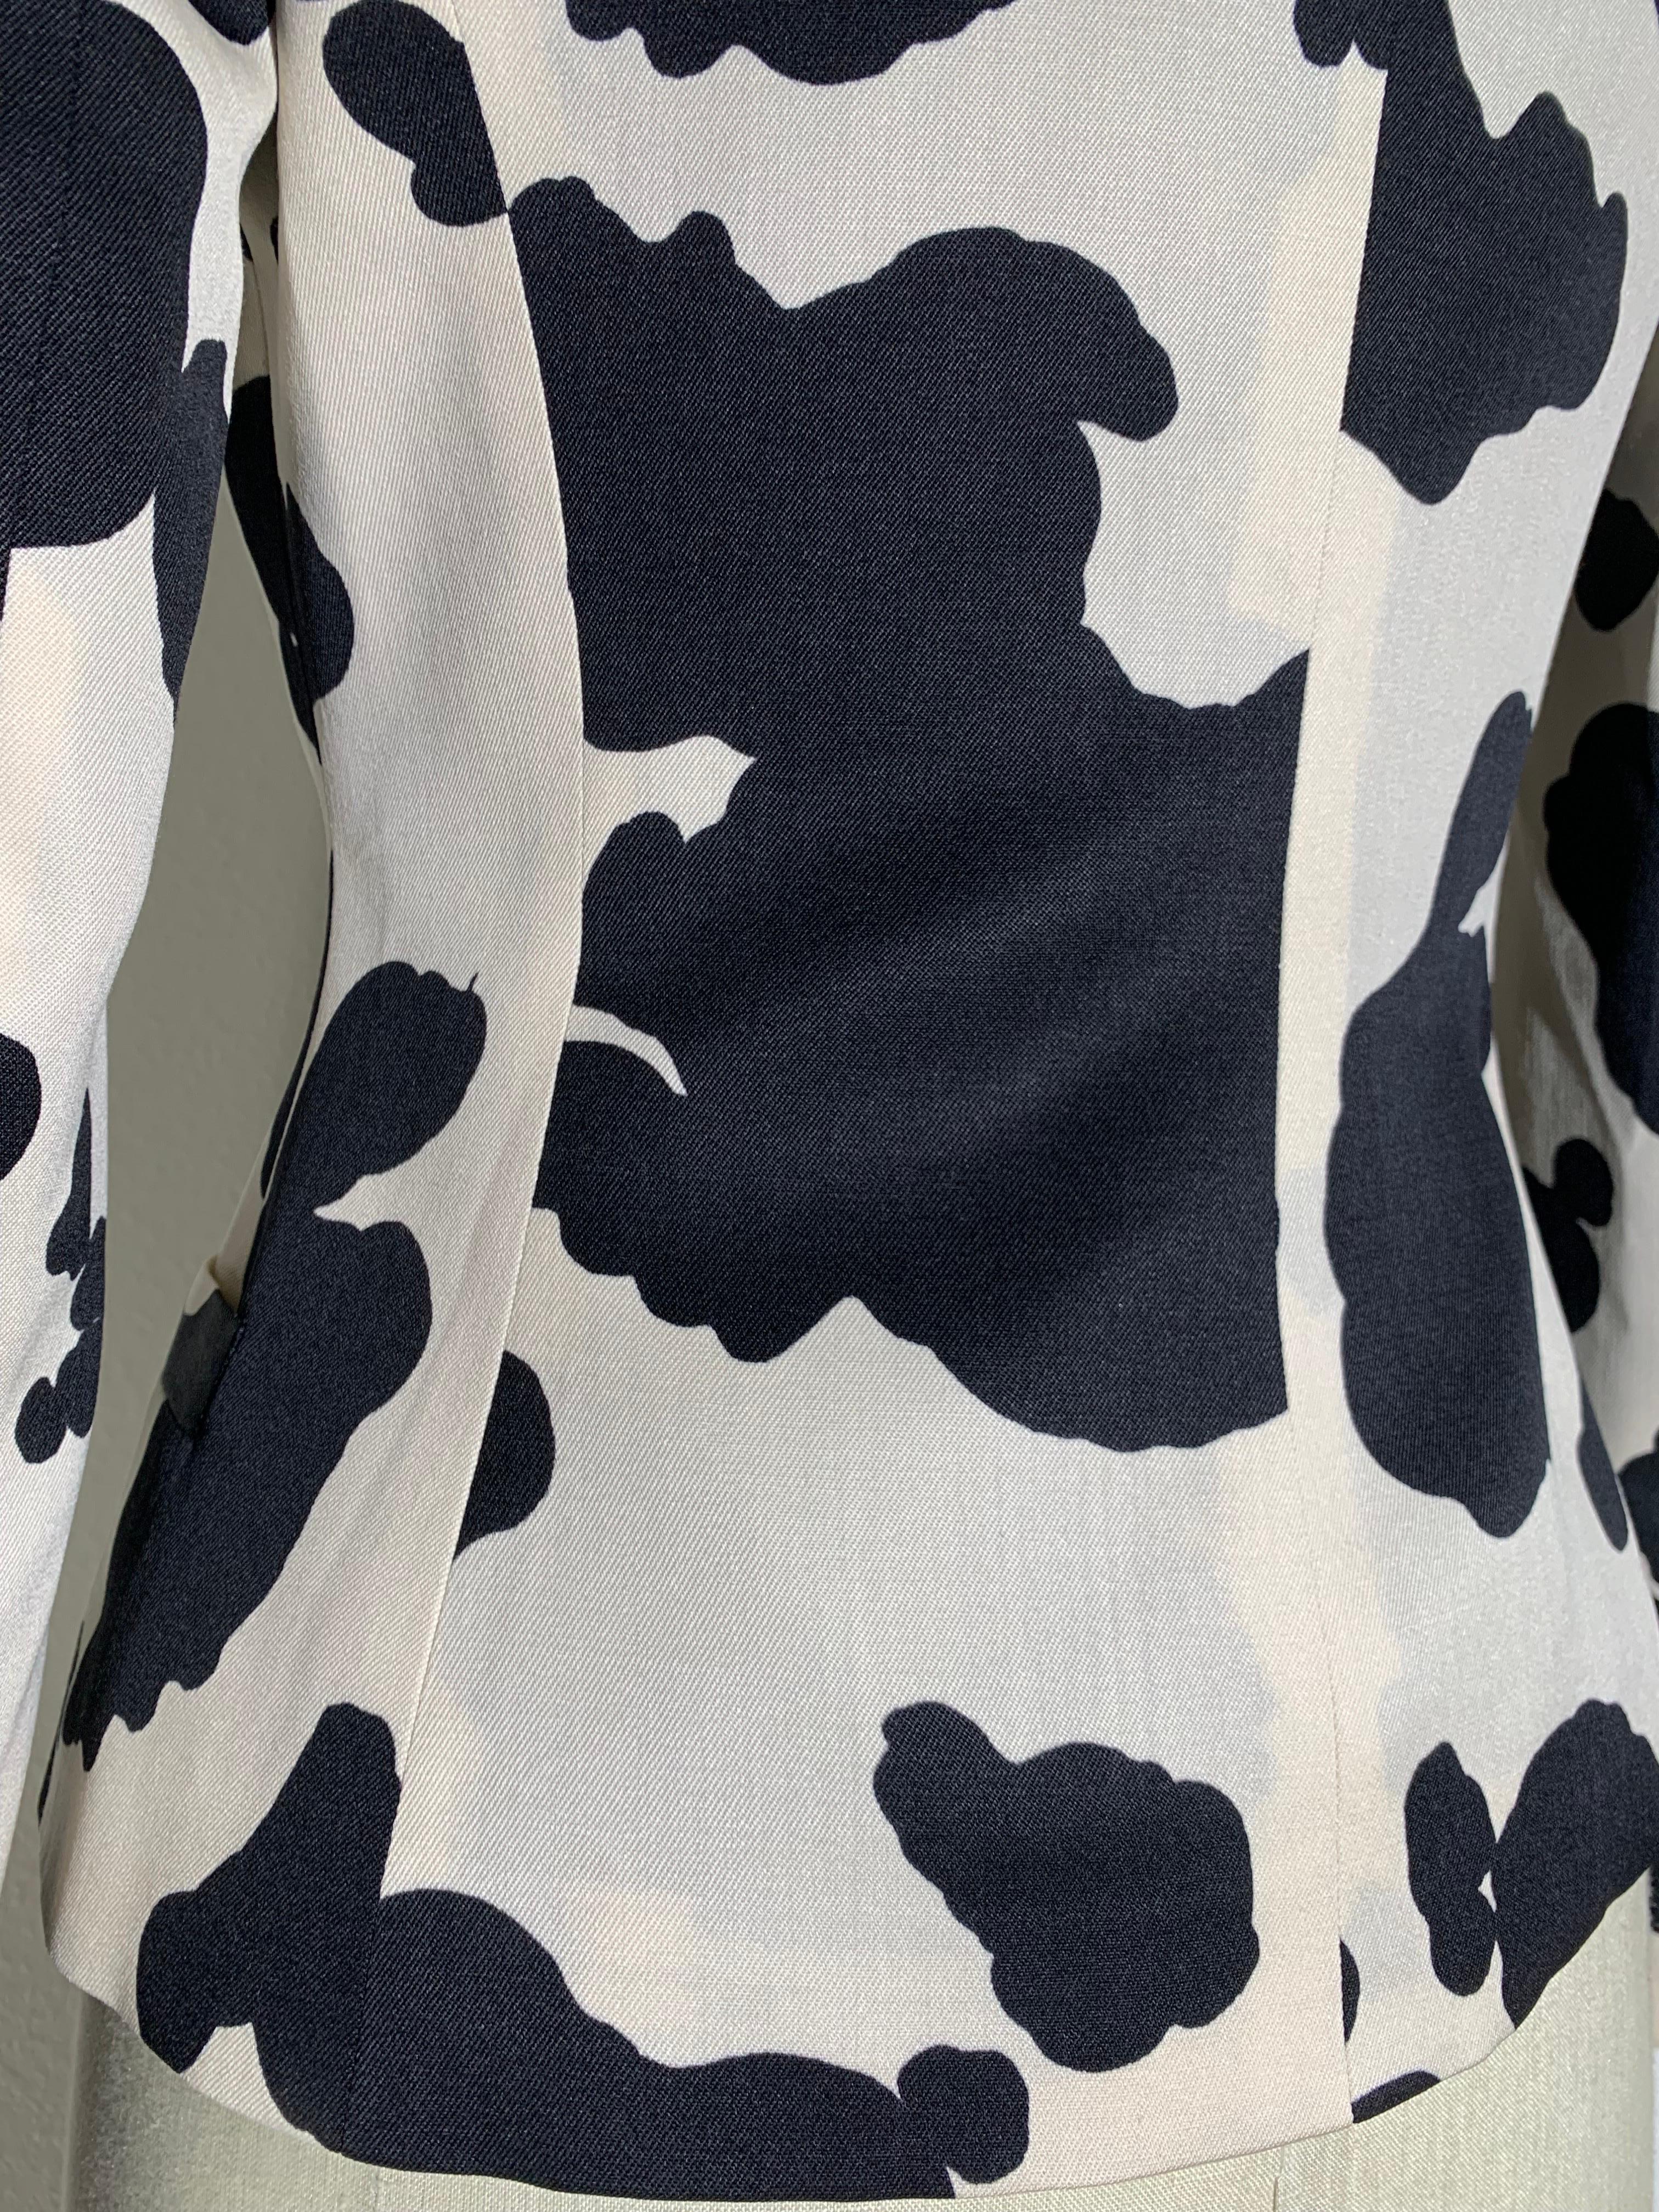 Gianni Versace Black/White Cow Print Wool Gabardine Jacket w Single Button For Sale 6